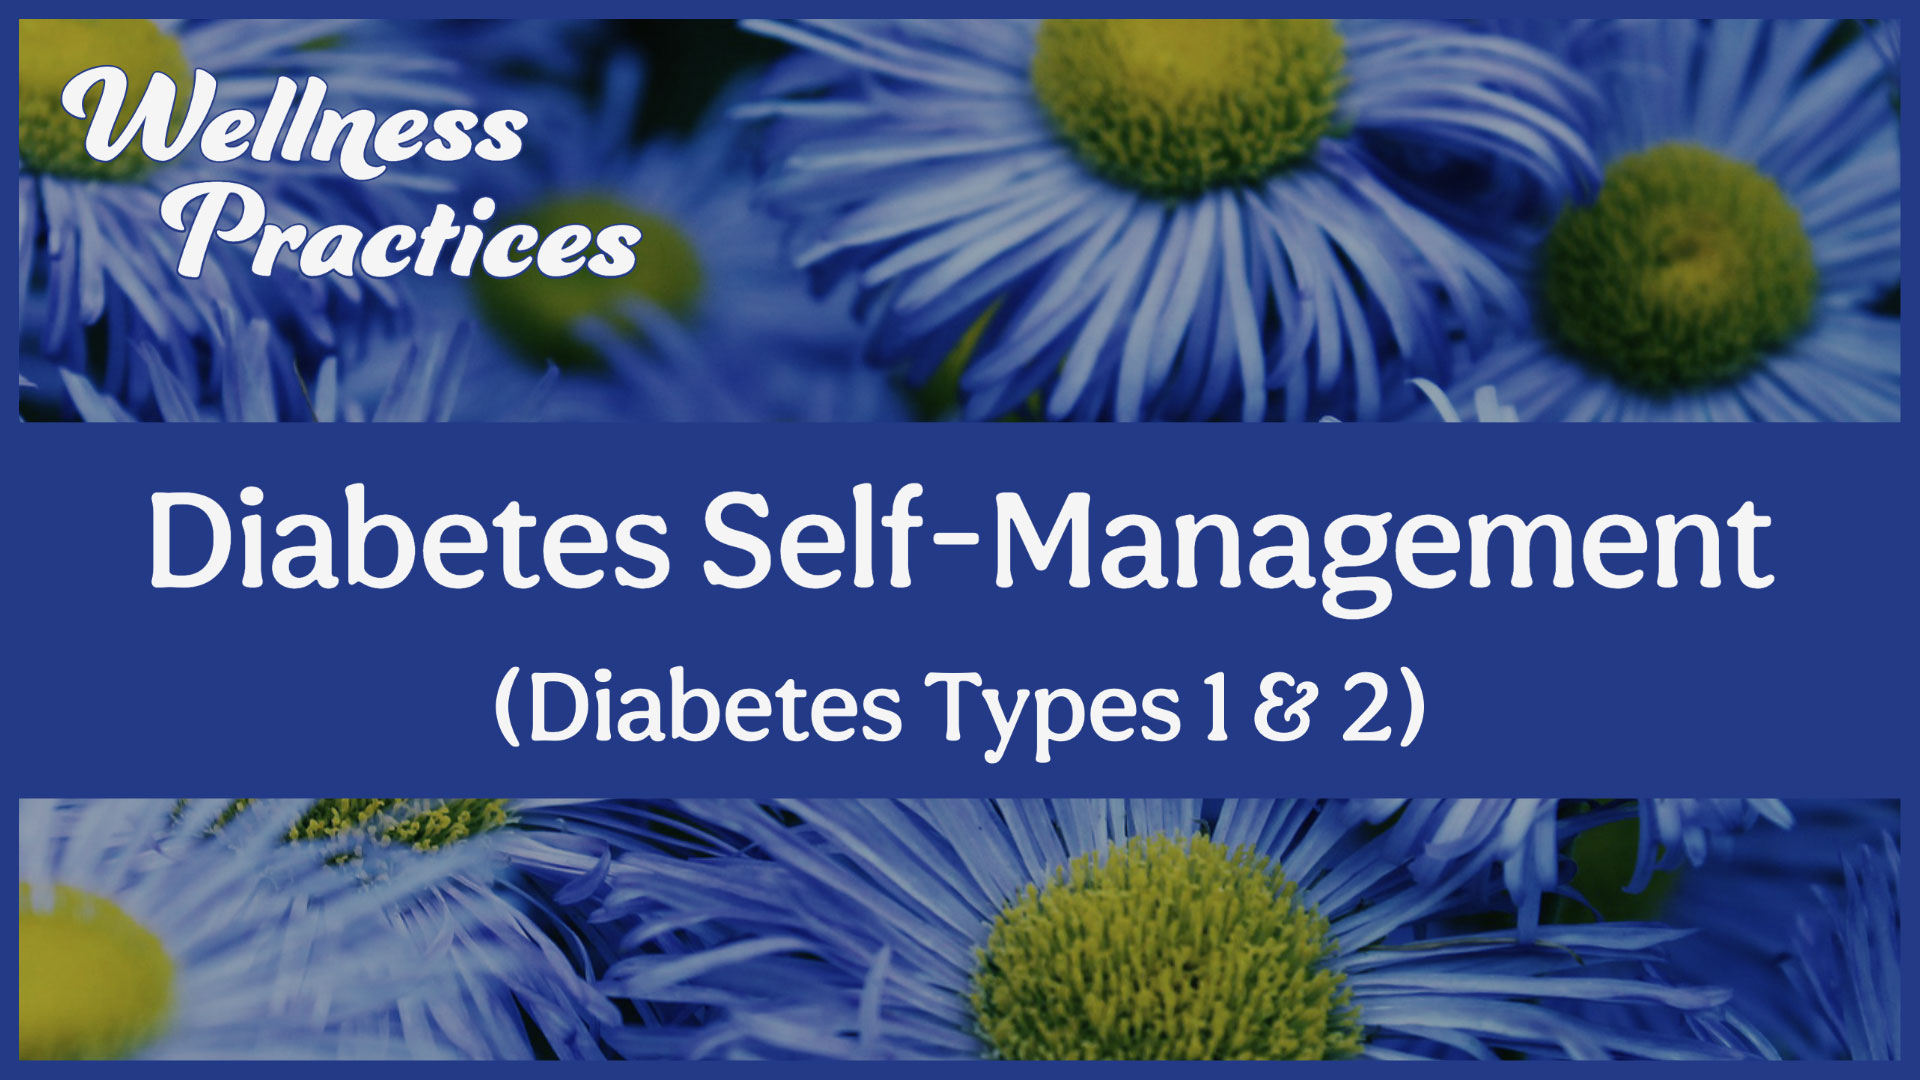 Wellness Practices: Diabetes Self-Management